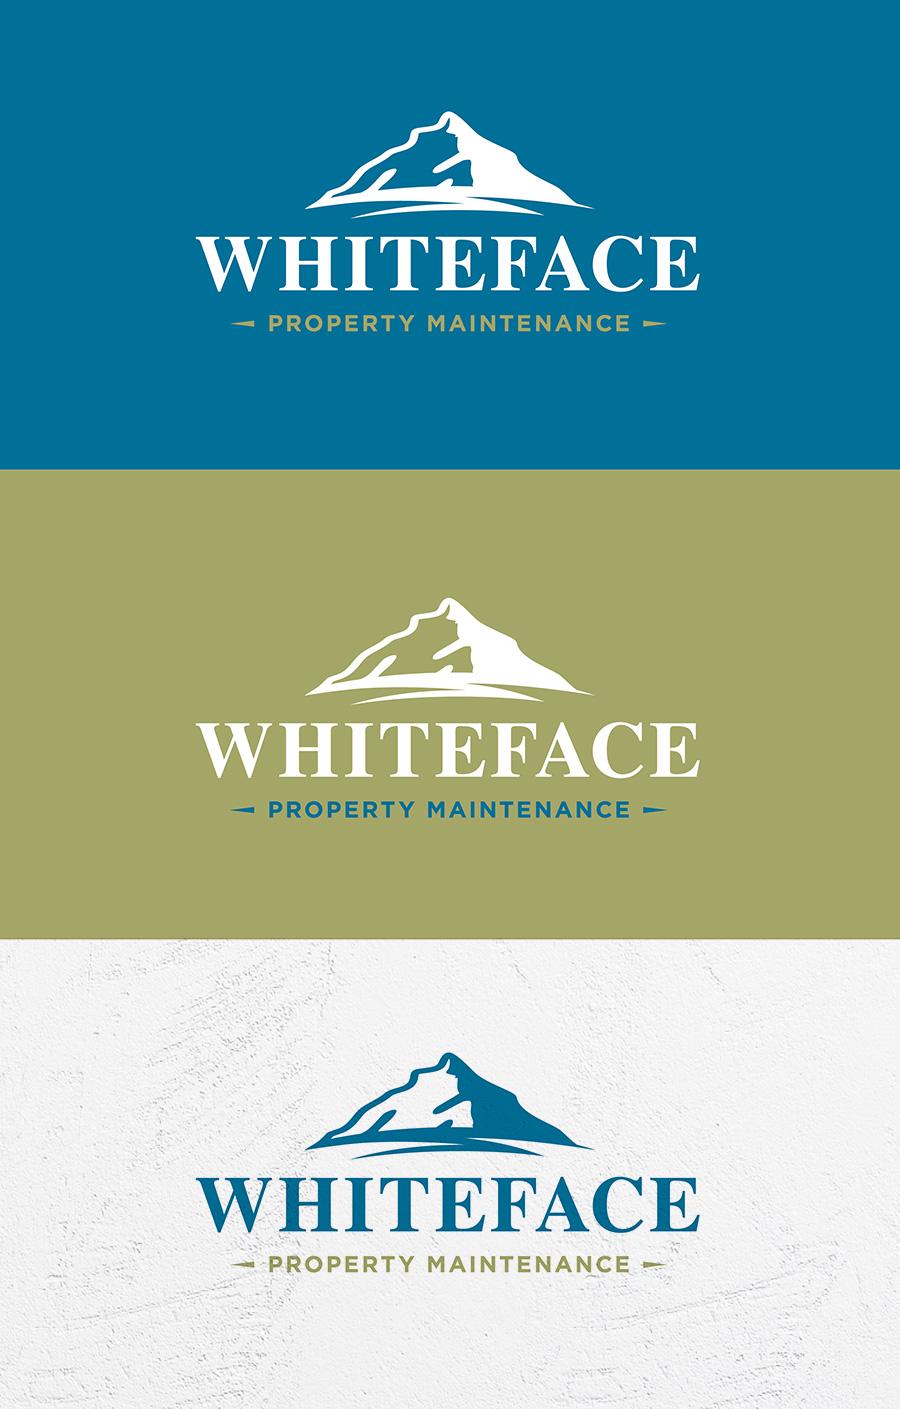 Green and White Face Logo - Whiteface Property Maintenance Logo Design